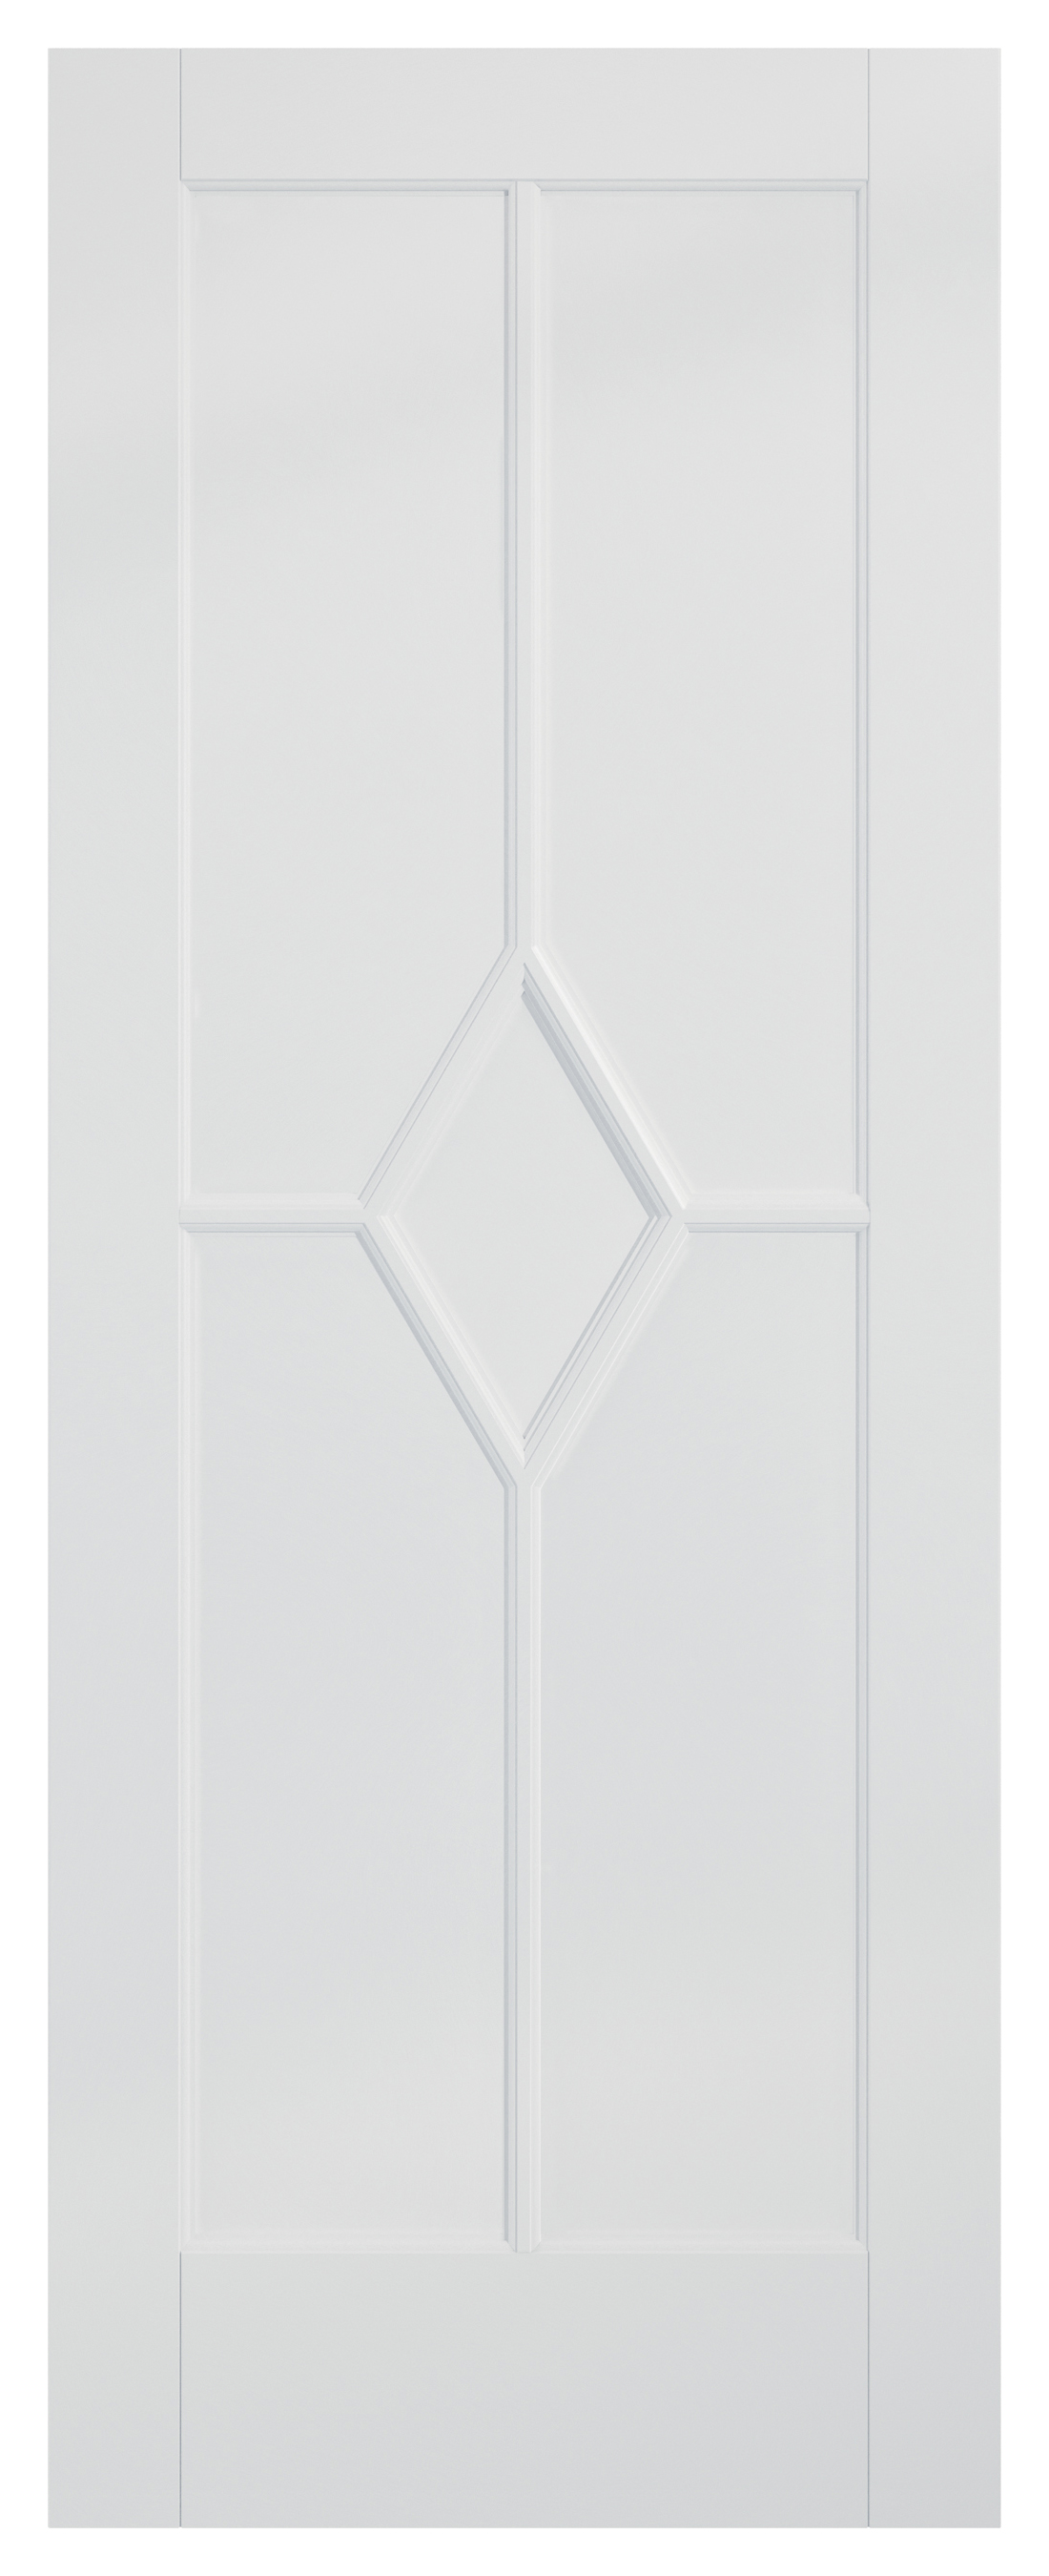 Image of LPD Internal Reims 5 Panel Primed White FD30 Fire Door - 838 x 1981mm